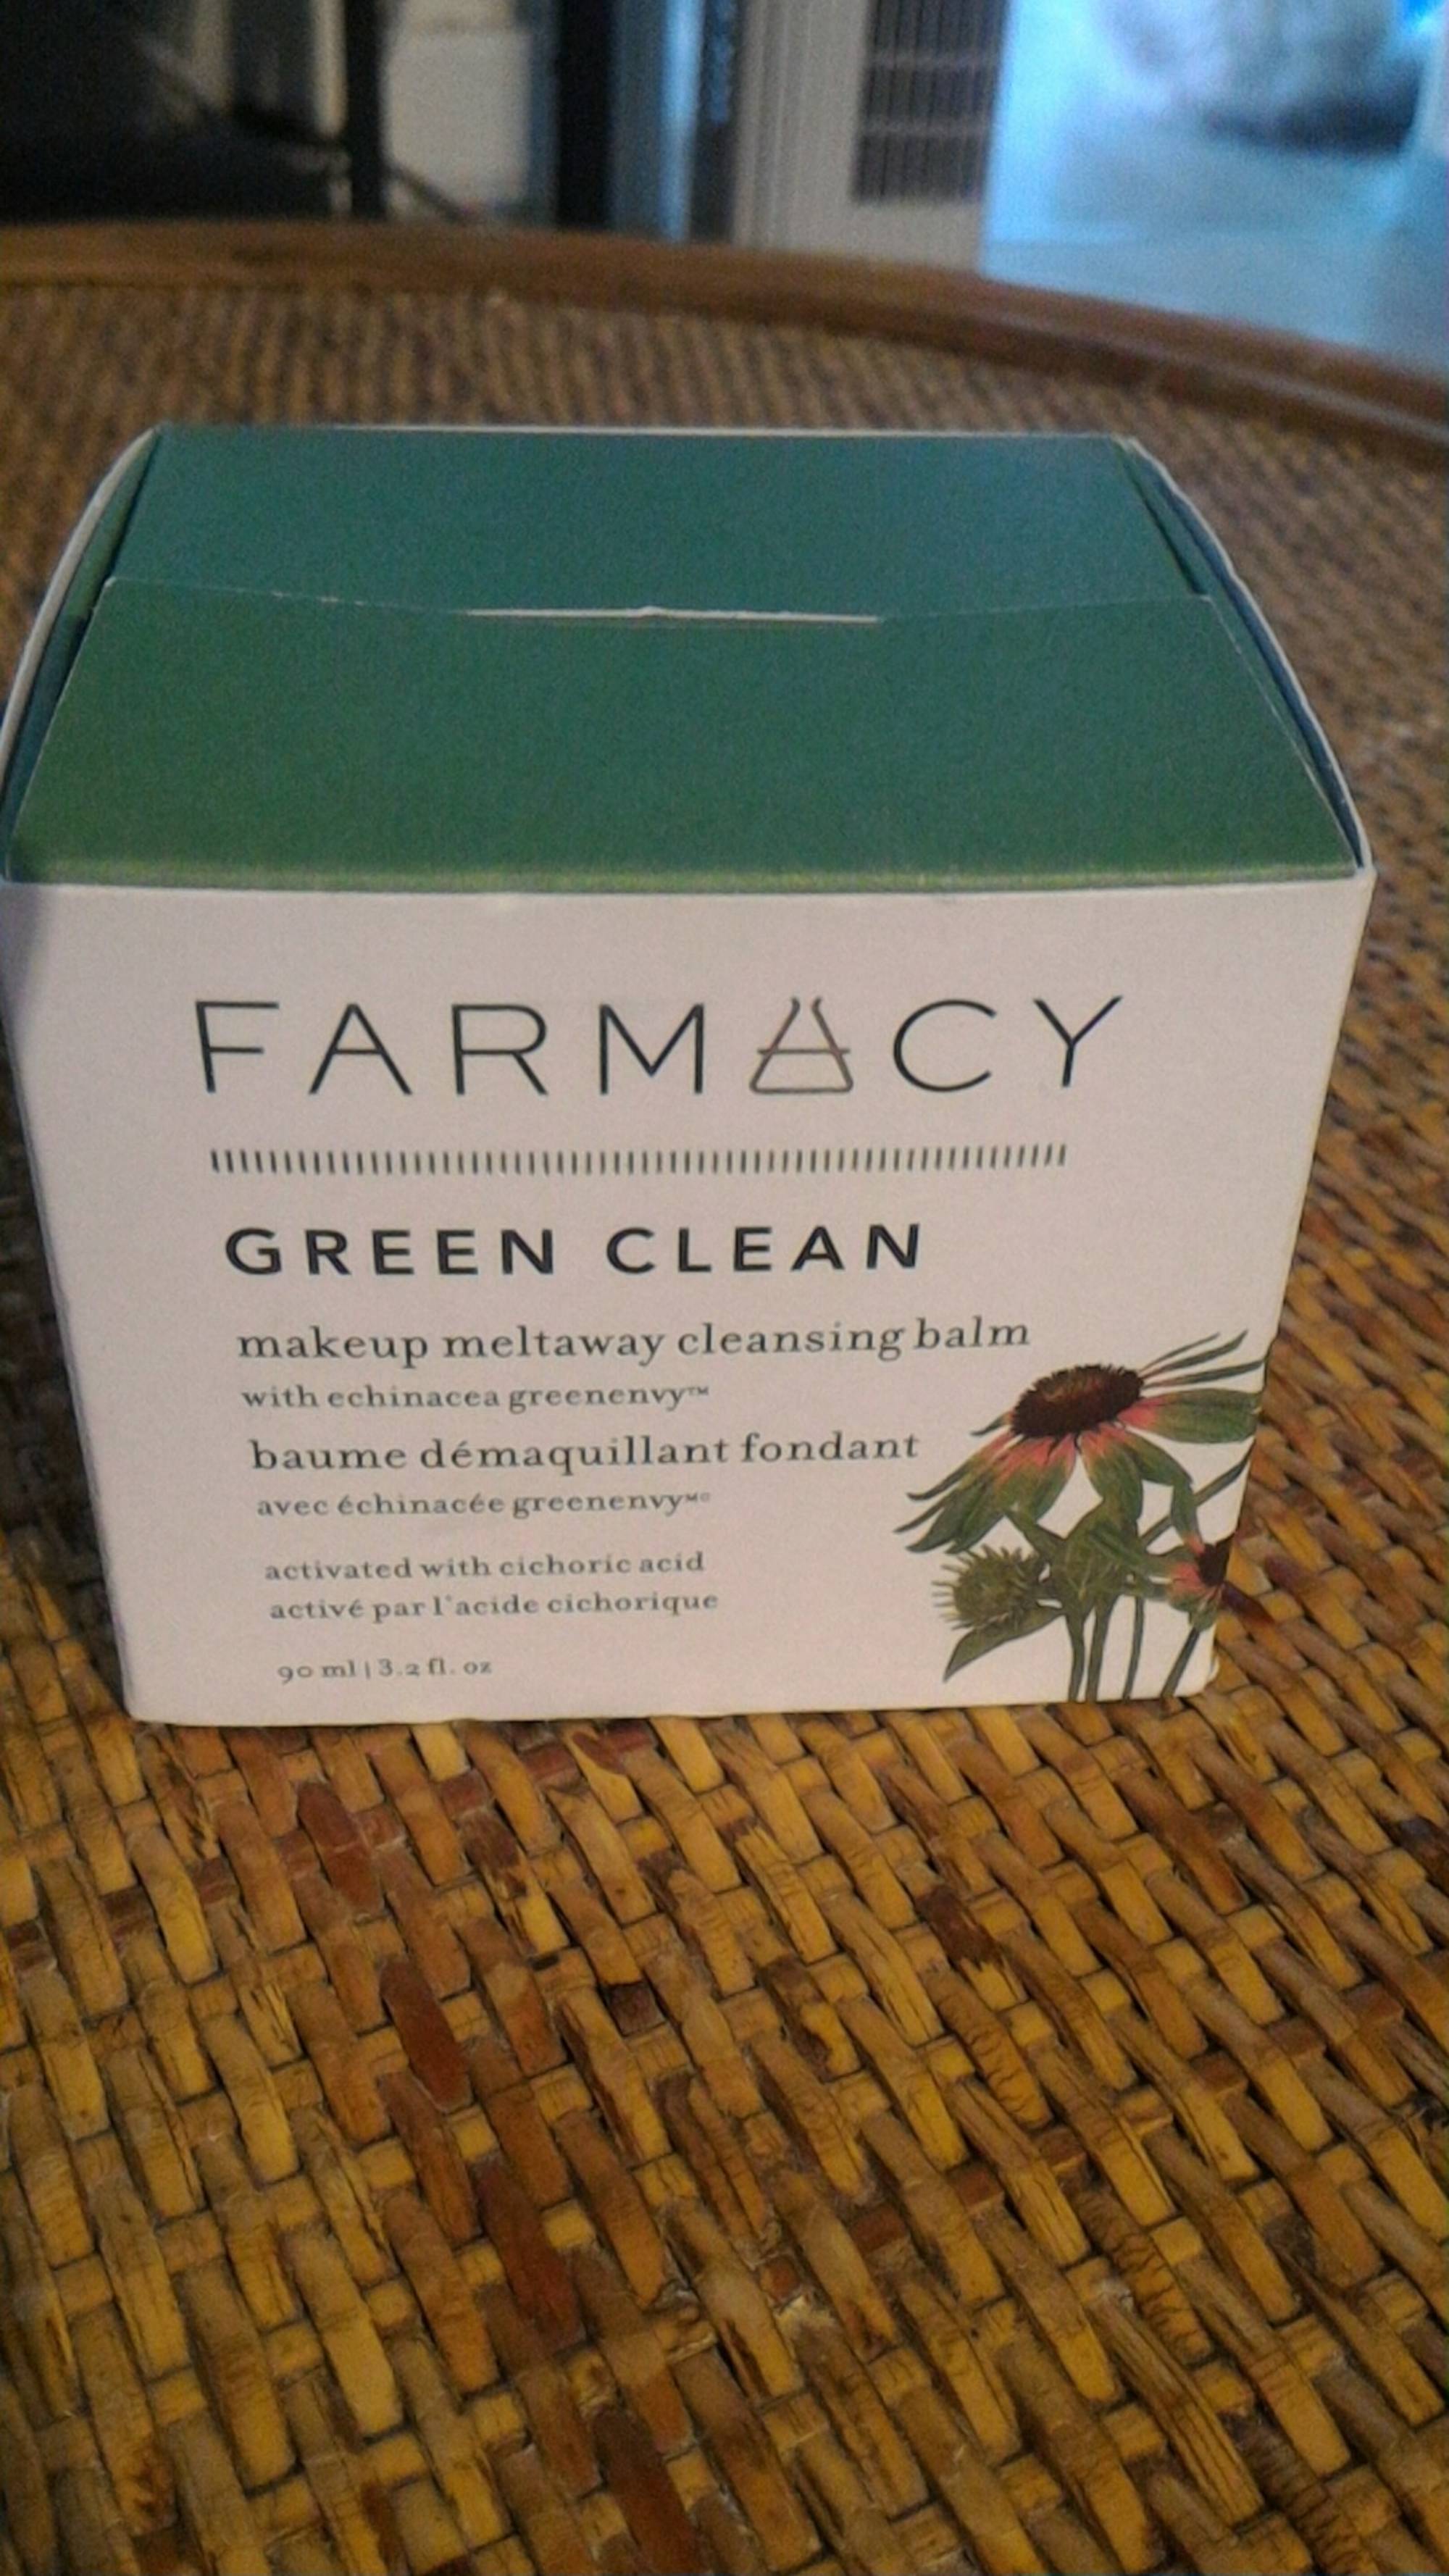 FARMACY - Green clean - Baume démaquillant fondant